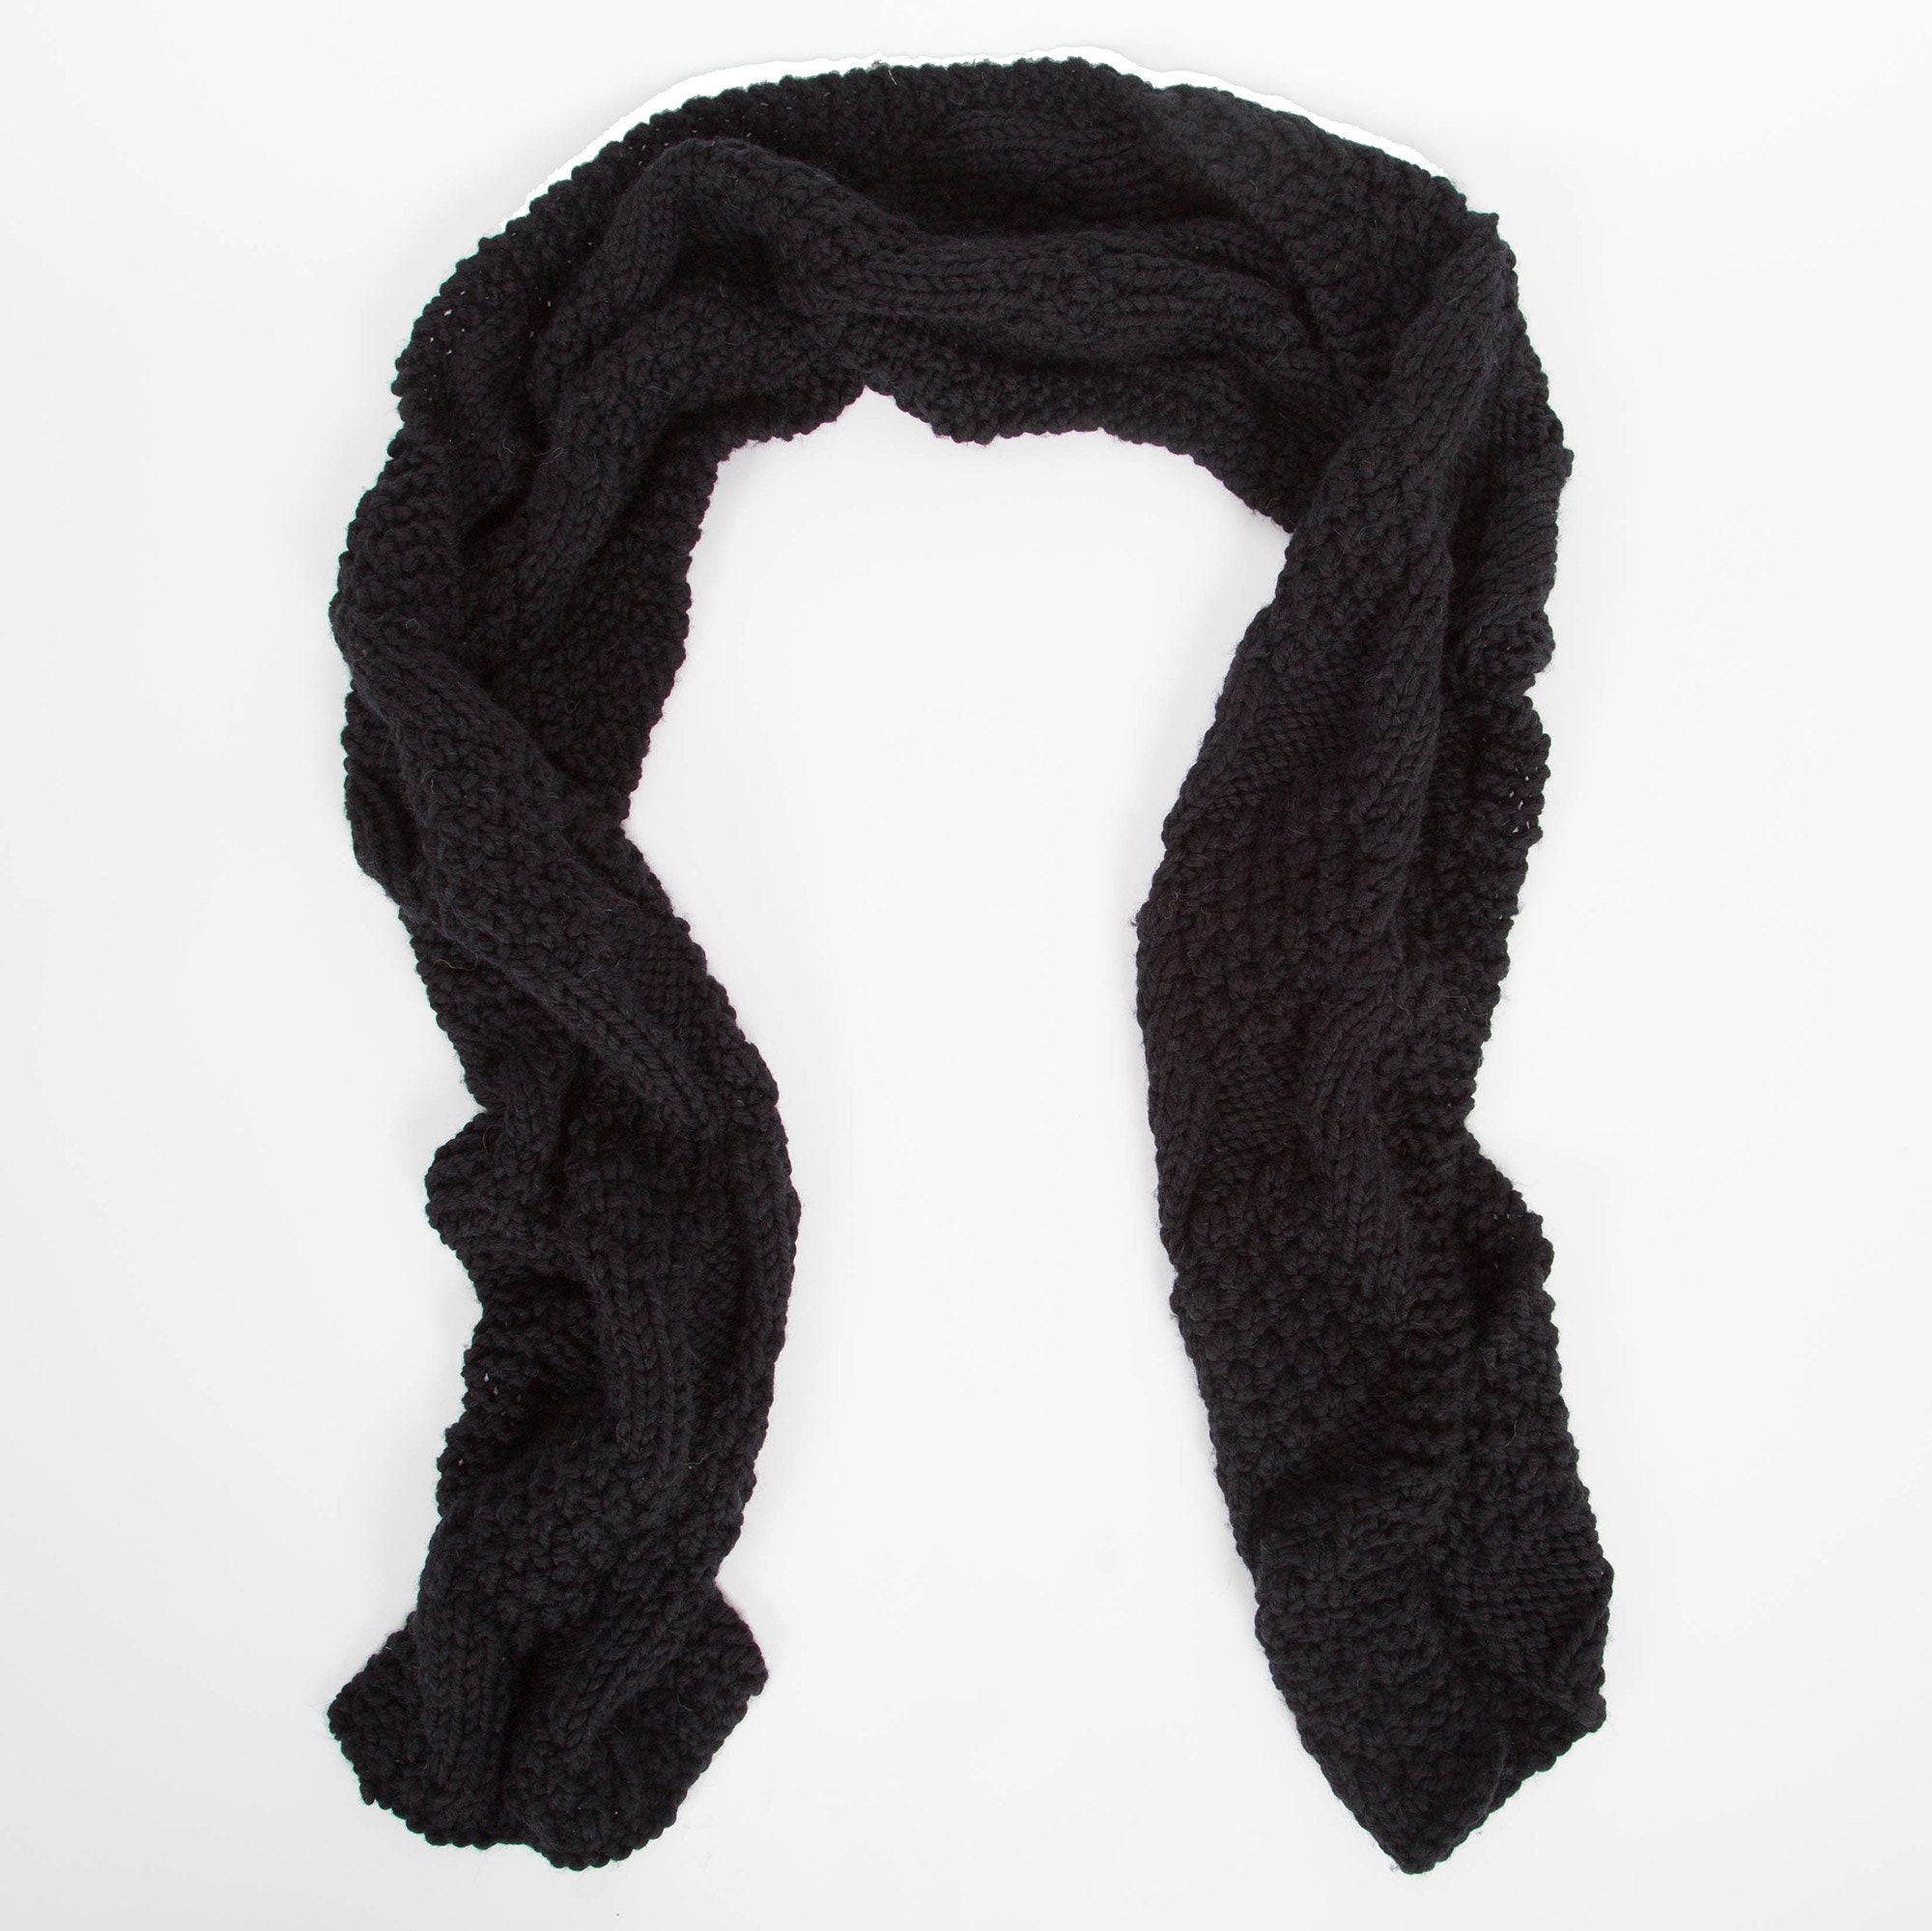 Chunky Black Wool Scarf 100% Merino Wool Black Winter Scarf - Etsy